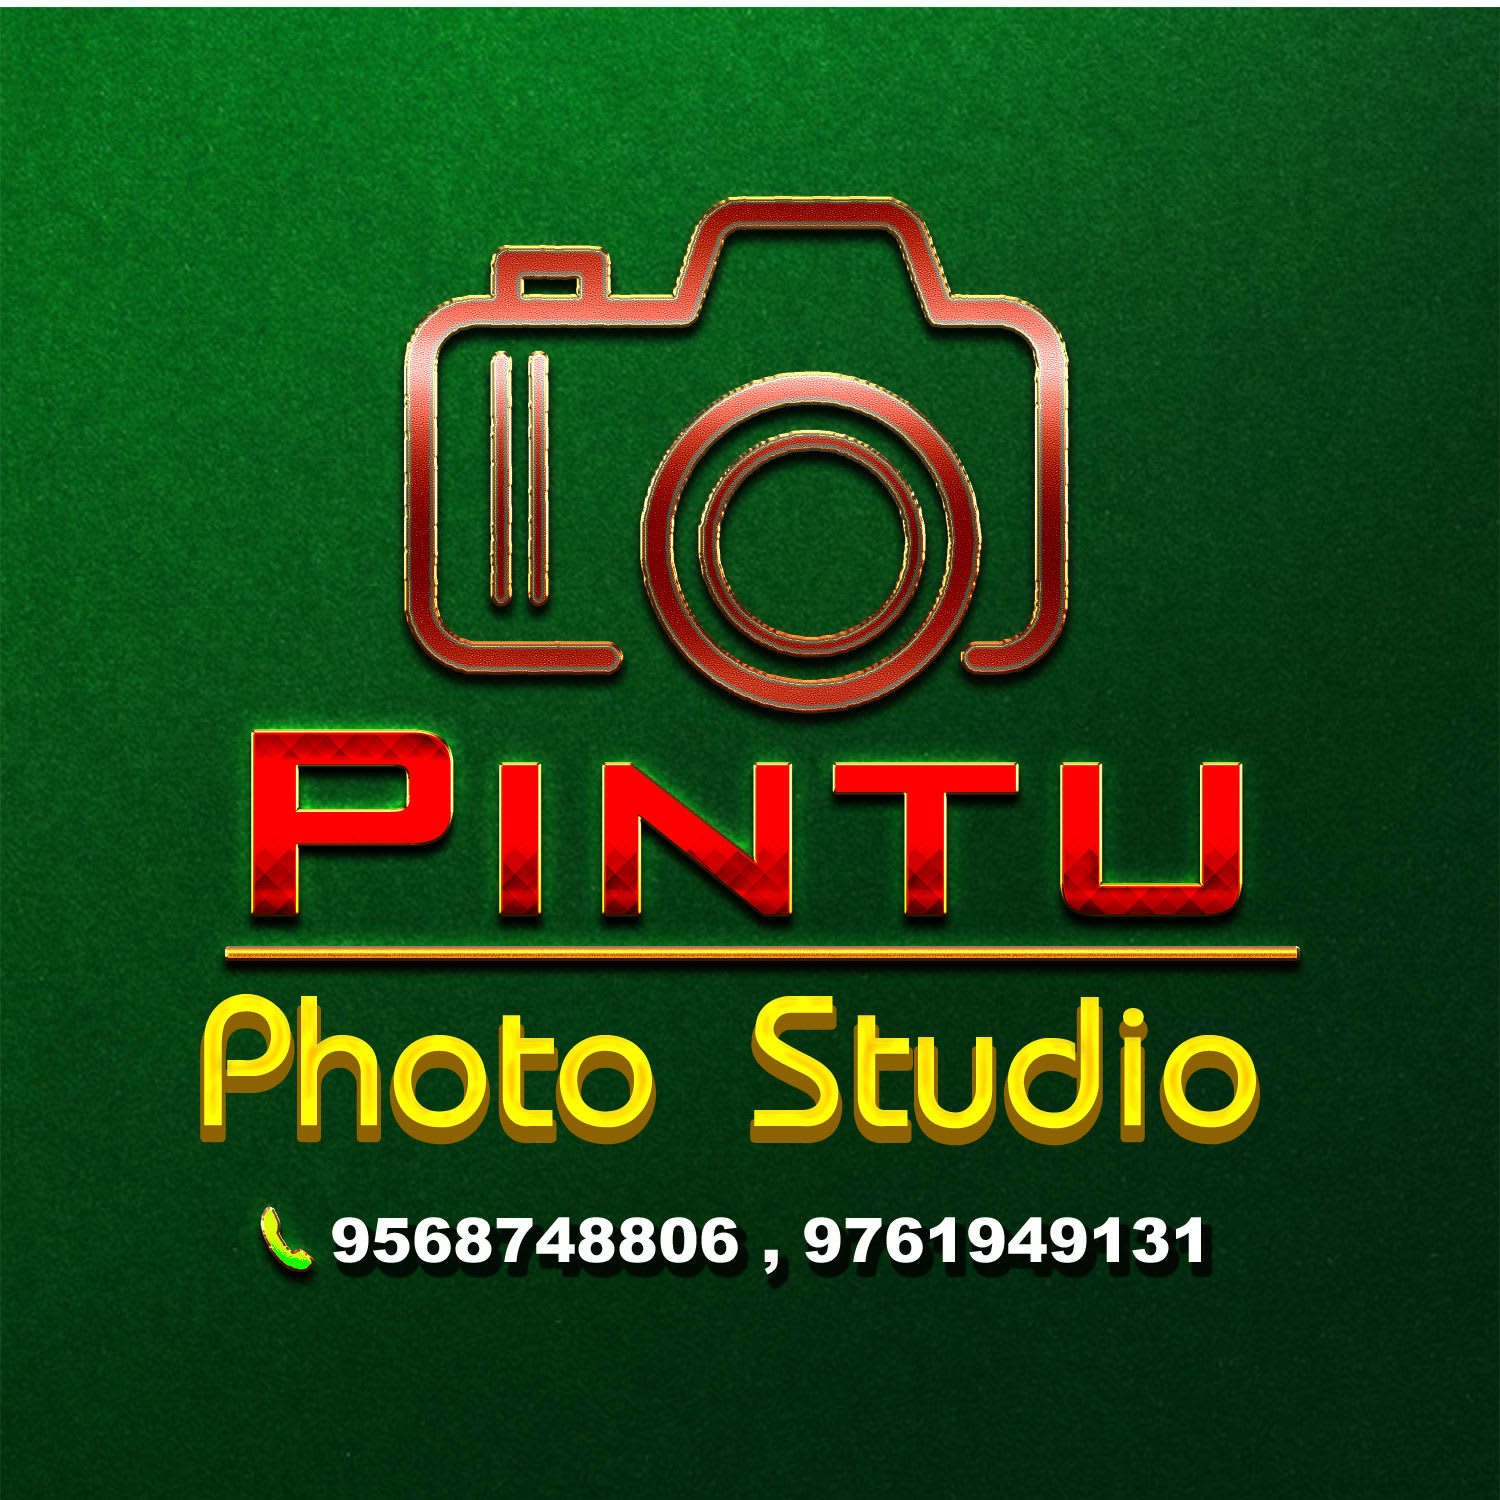 Pintu Photo Studio